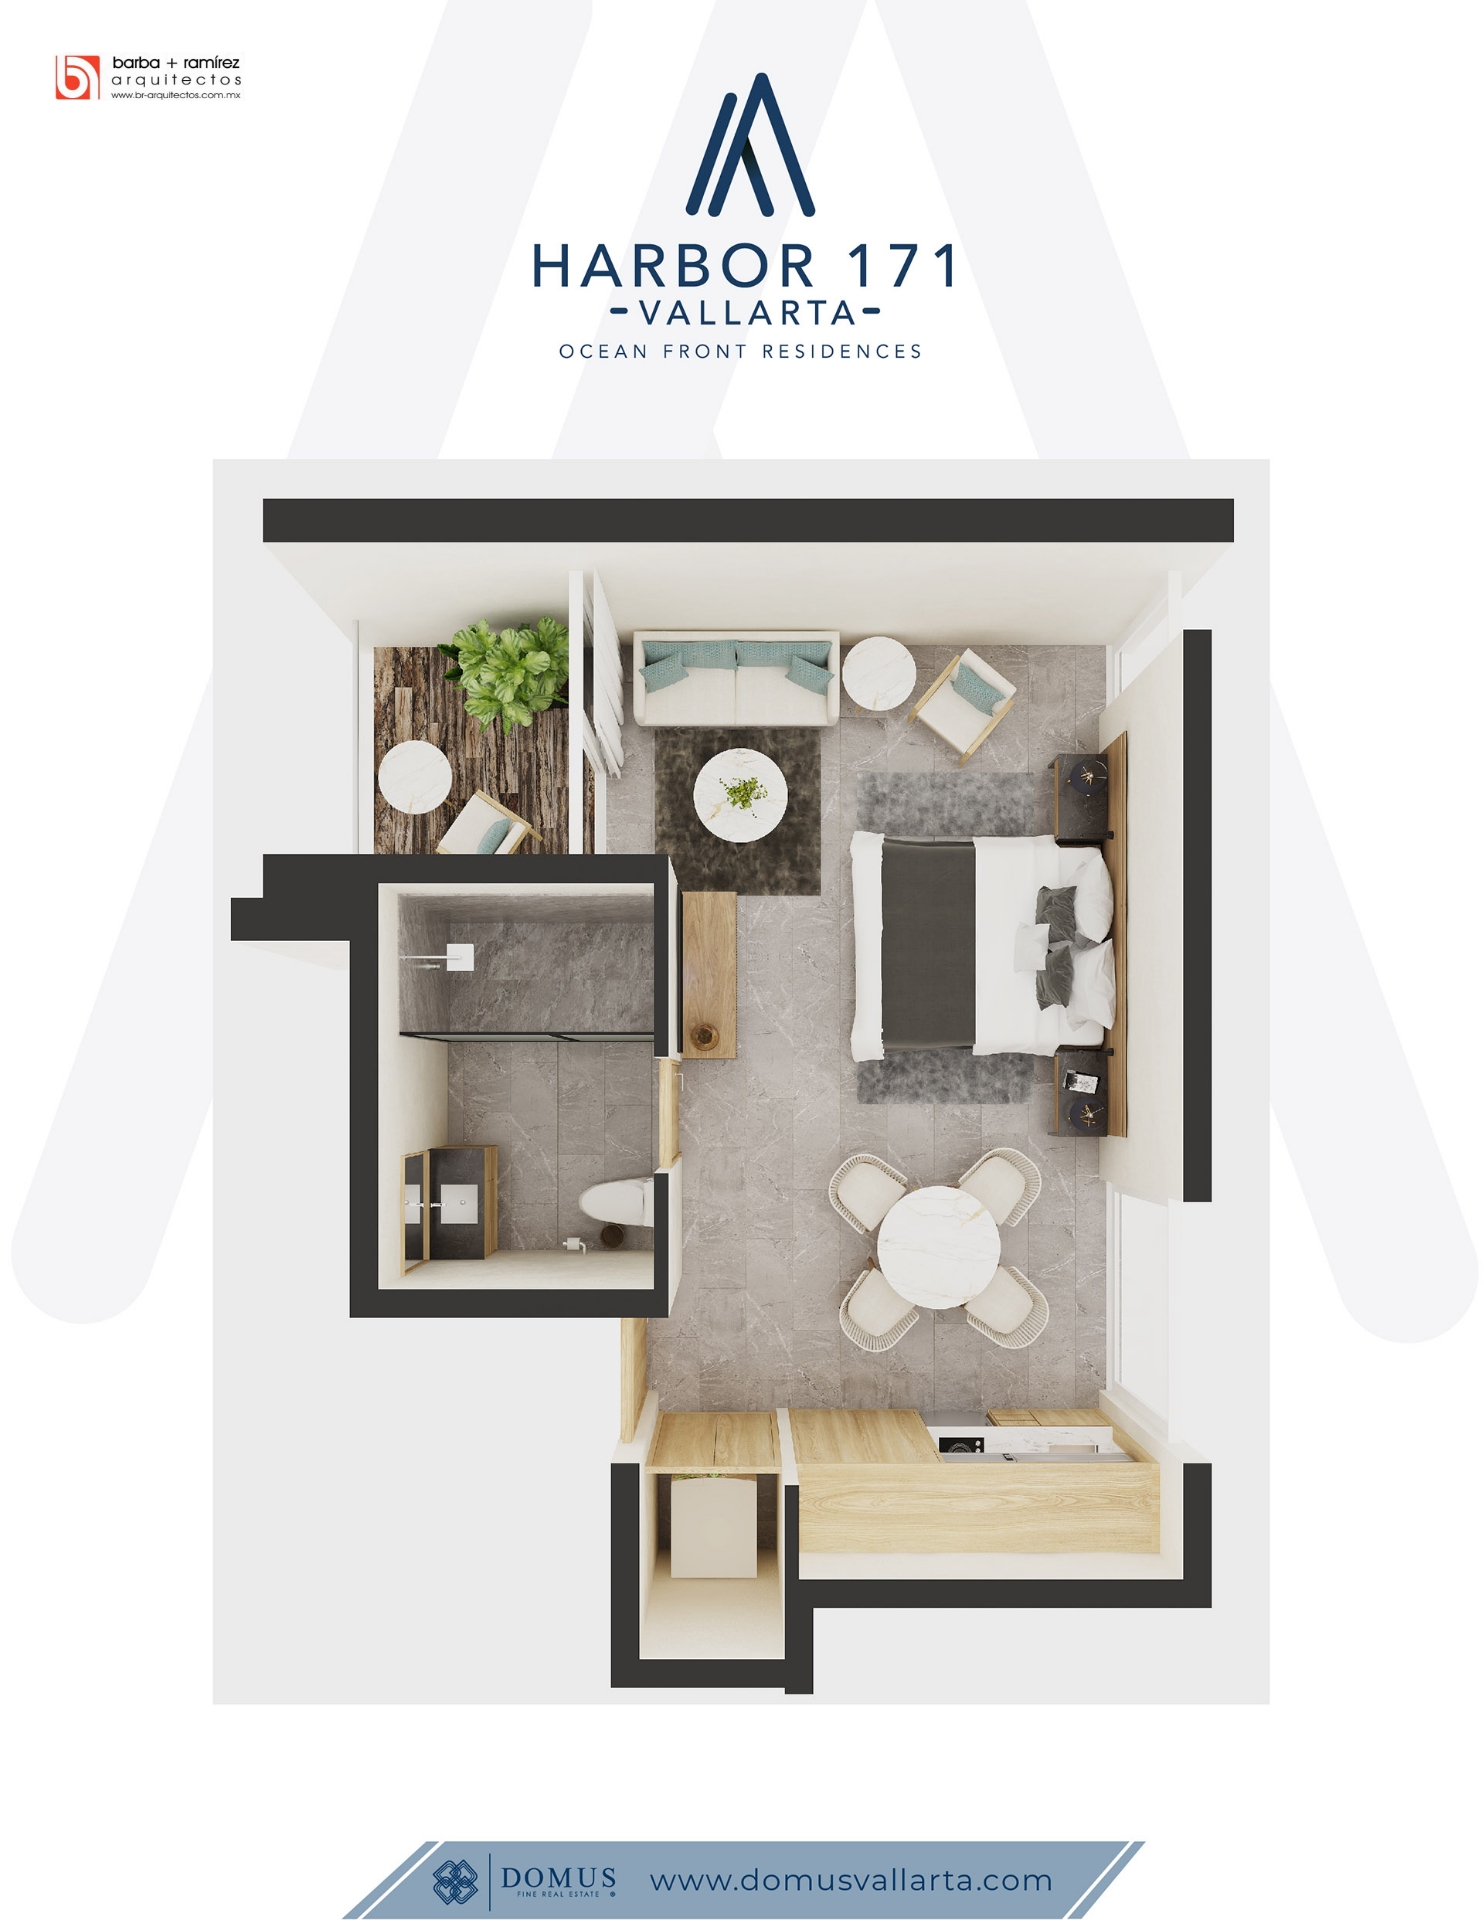 Unit 2210 Blueprint - Harbor 171